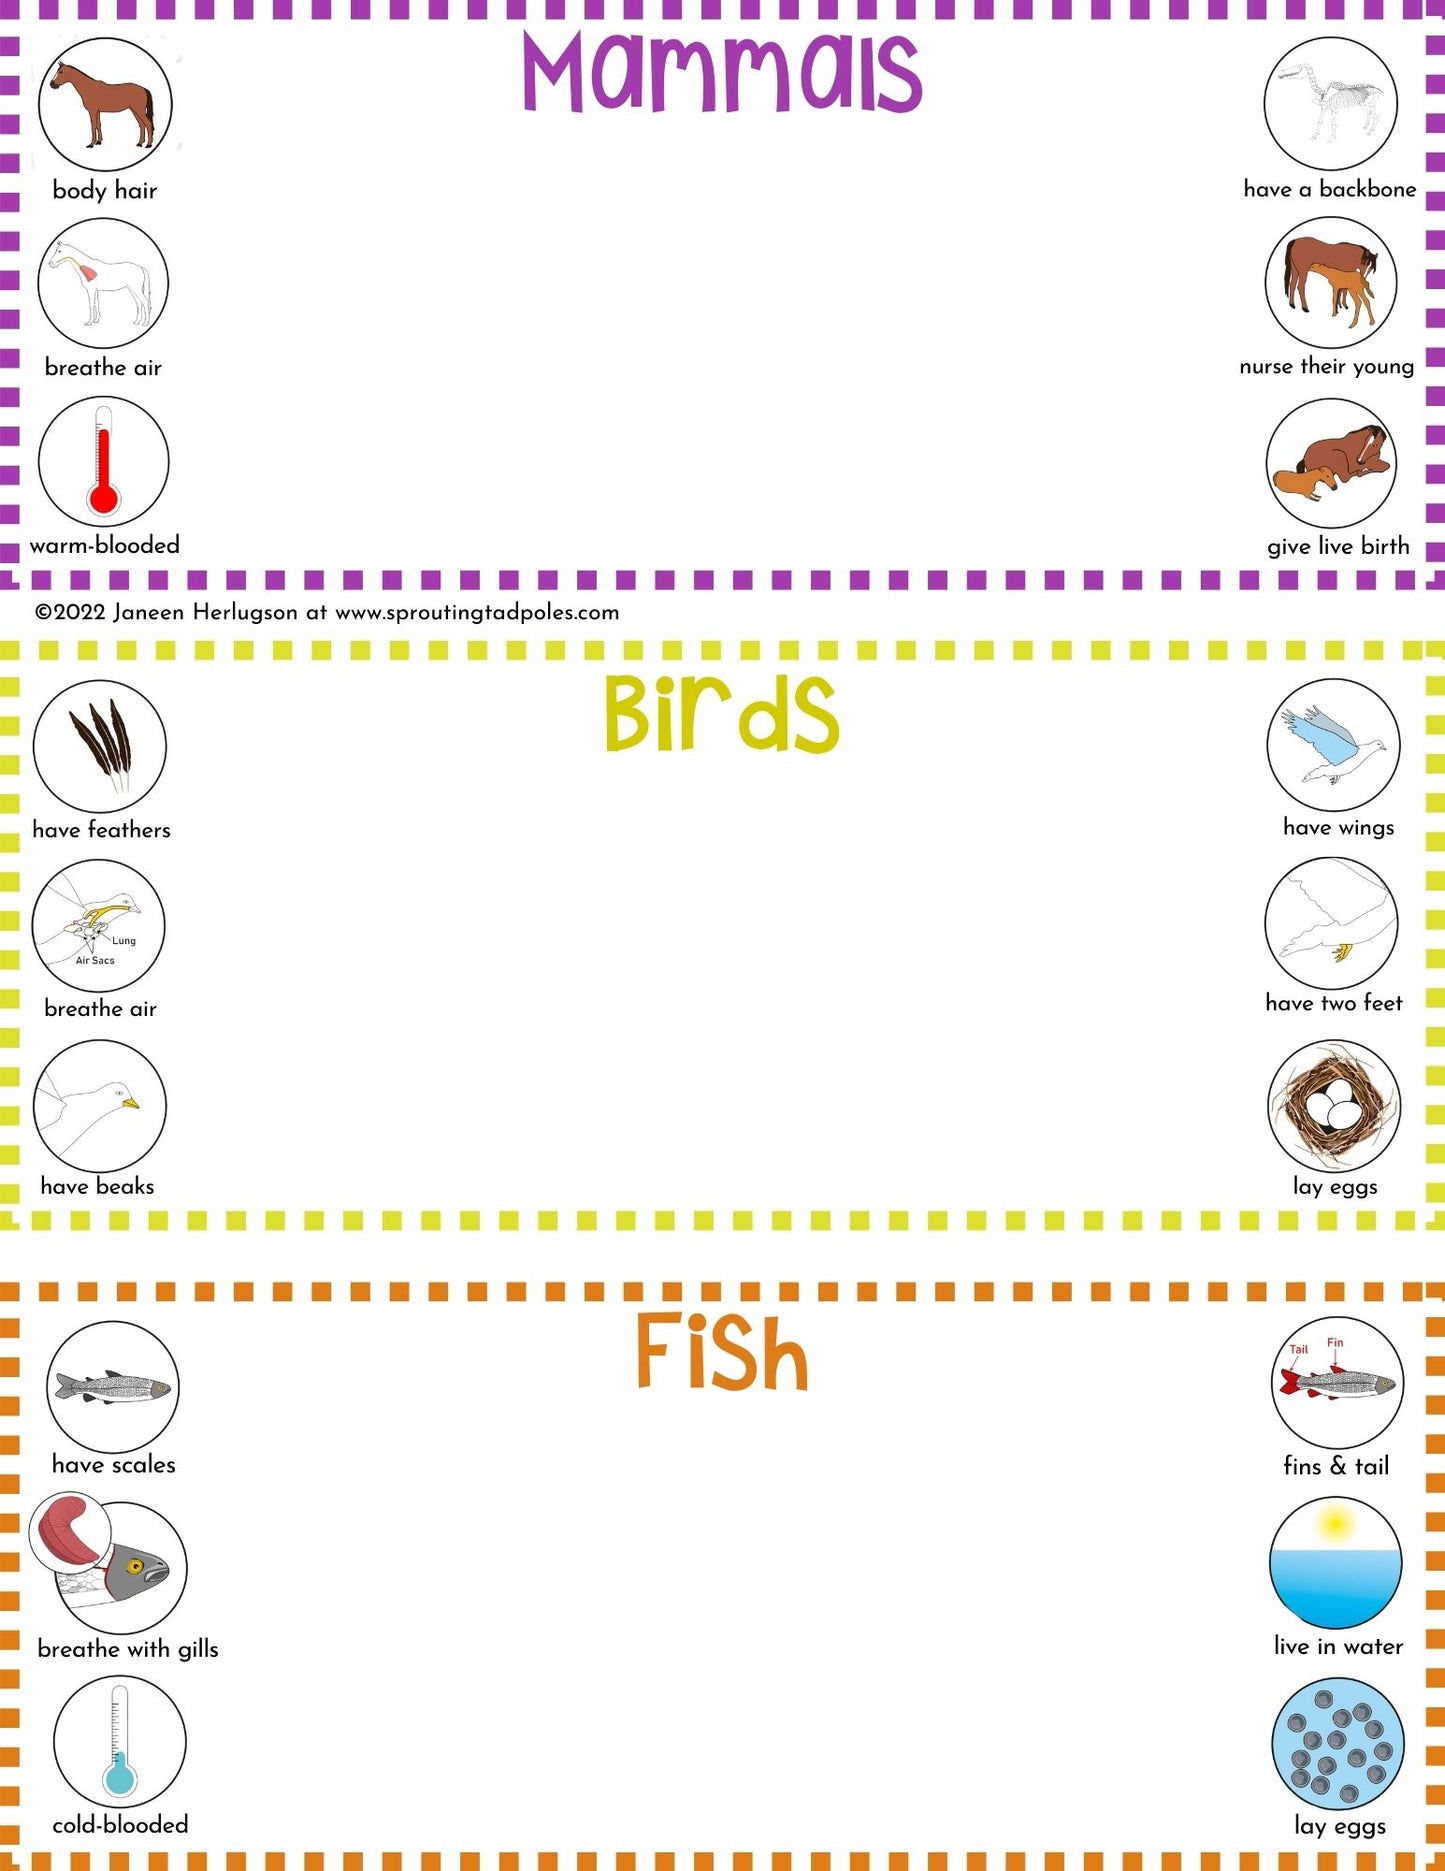 Animal Kingdom Classification Activity